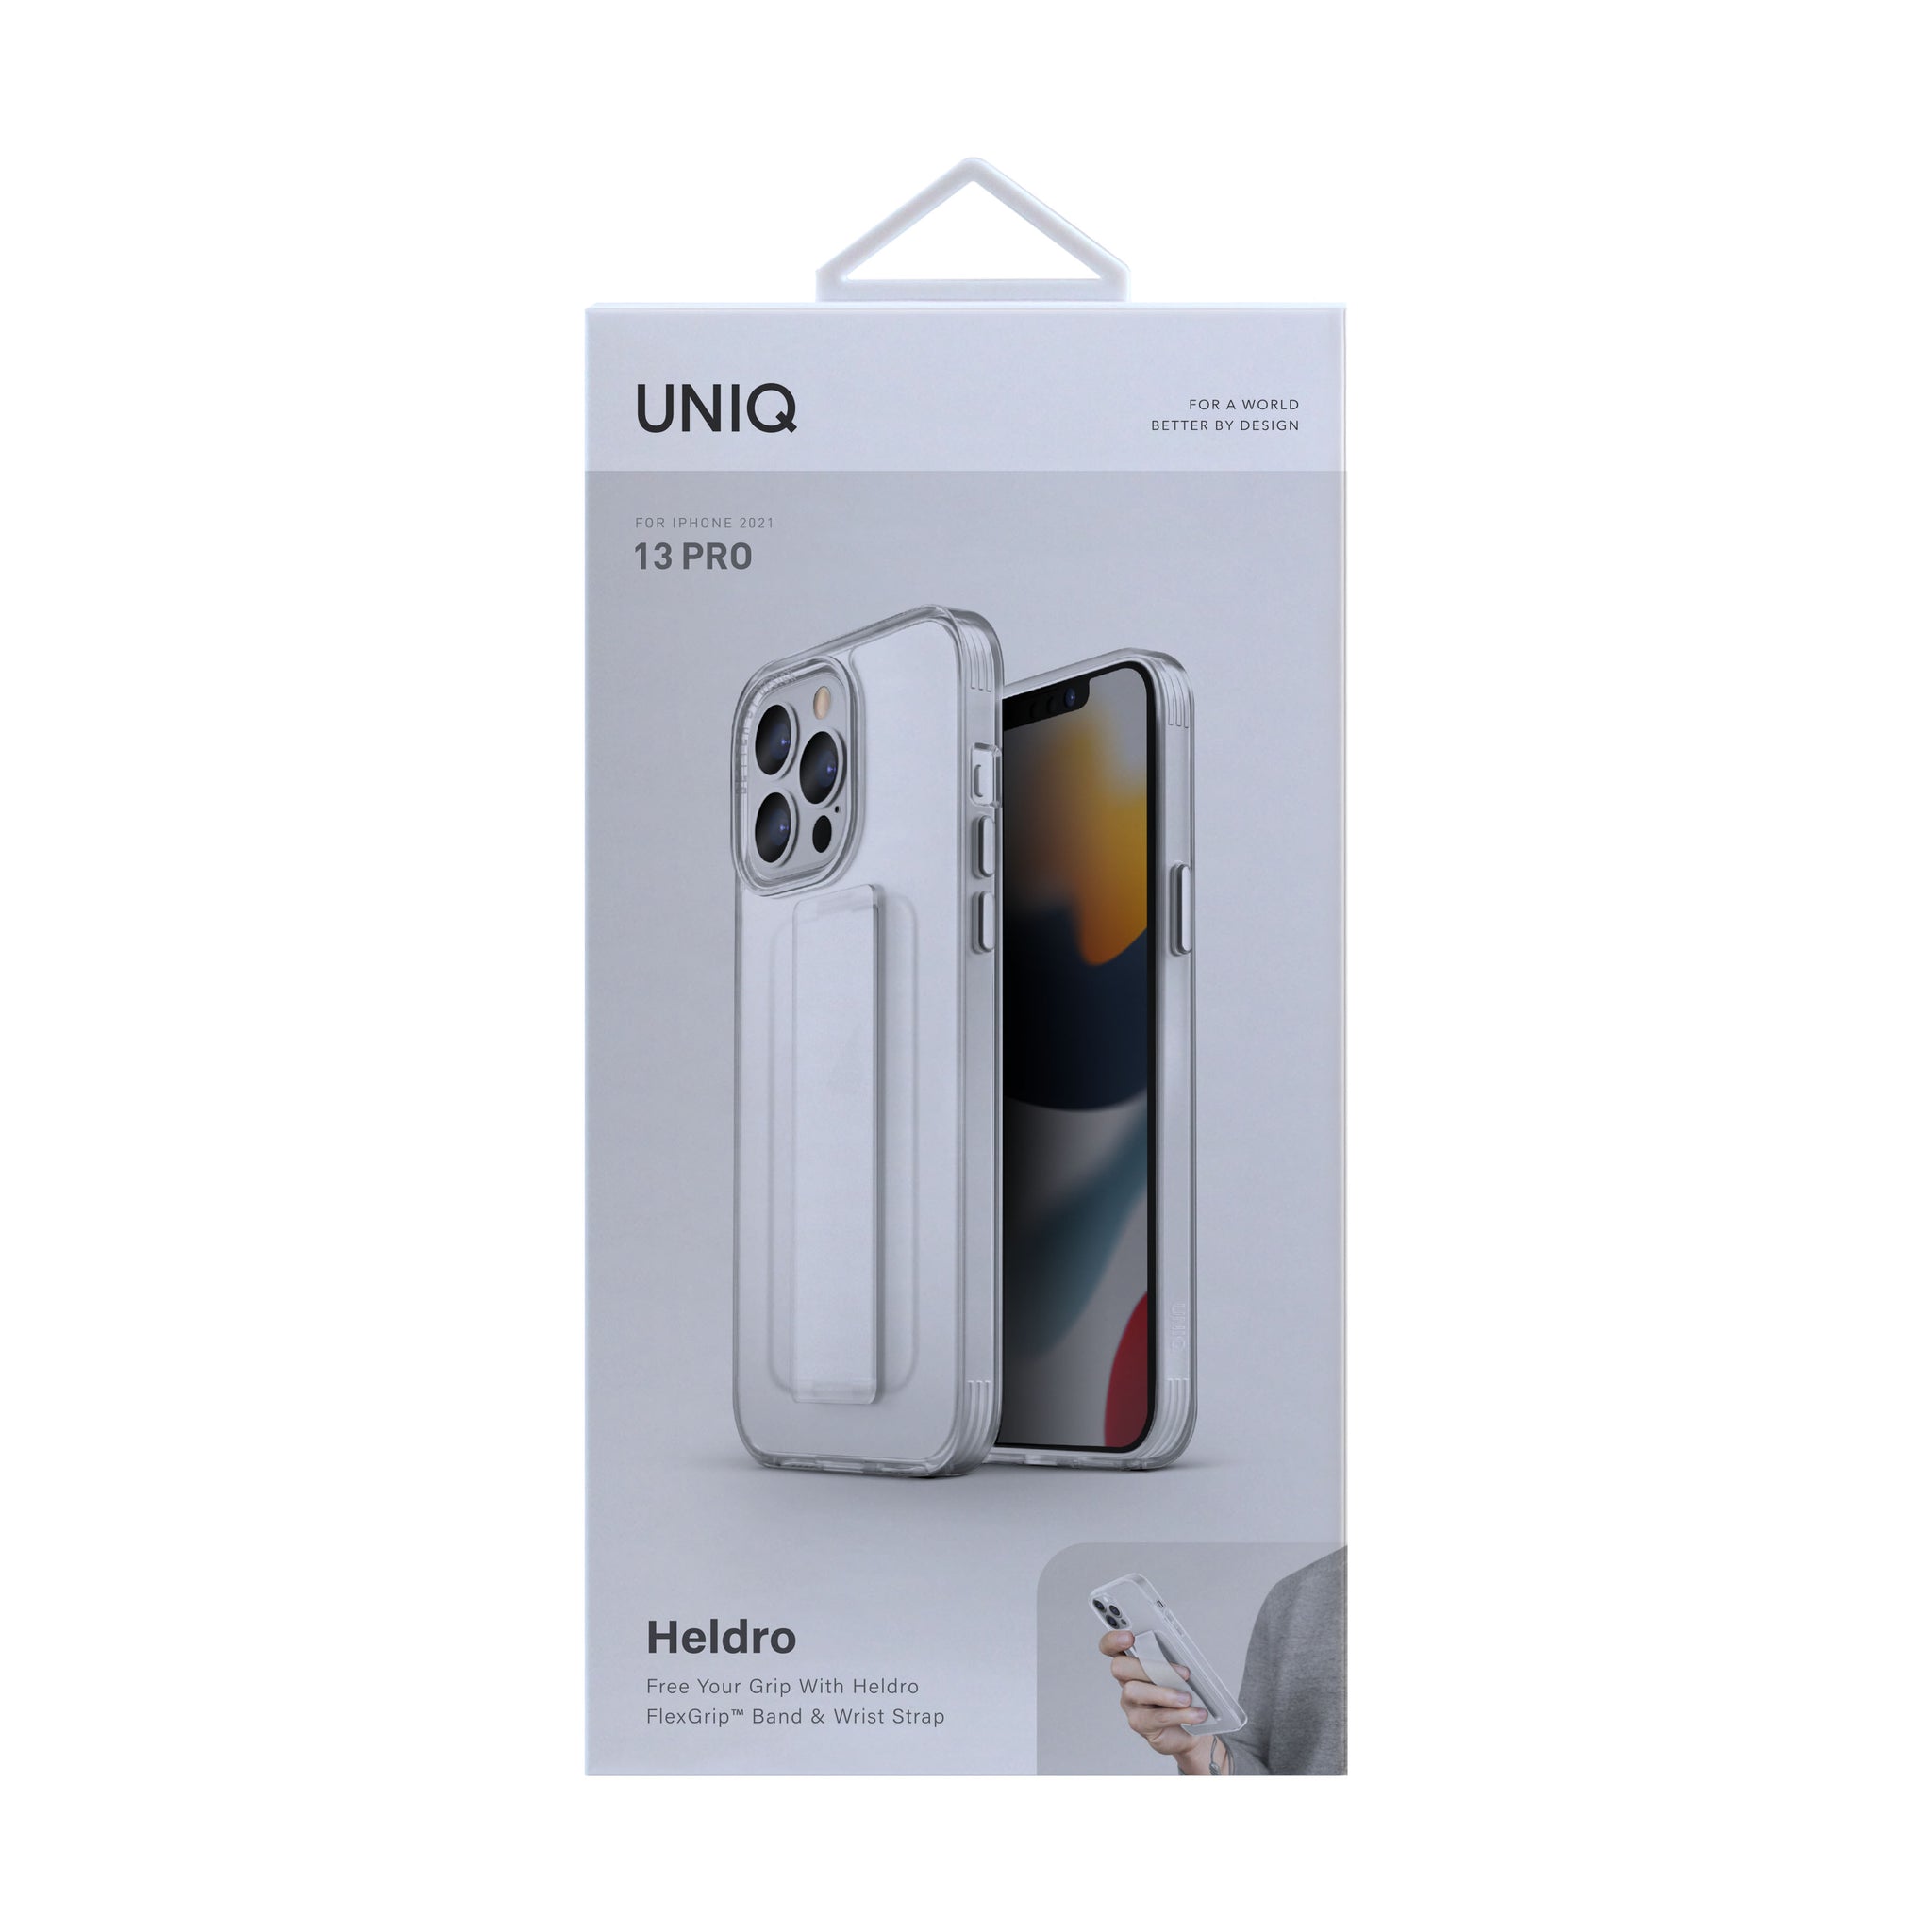 Uniq Hybrid Iphone 13 pro Heldro - Lucent (CLEAR)